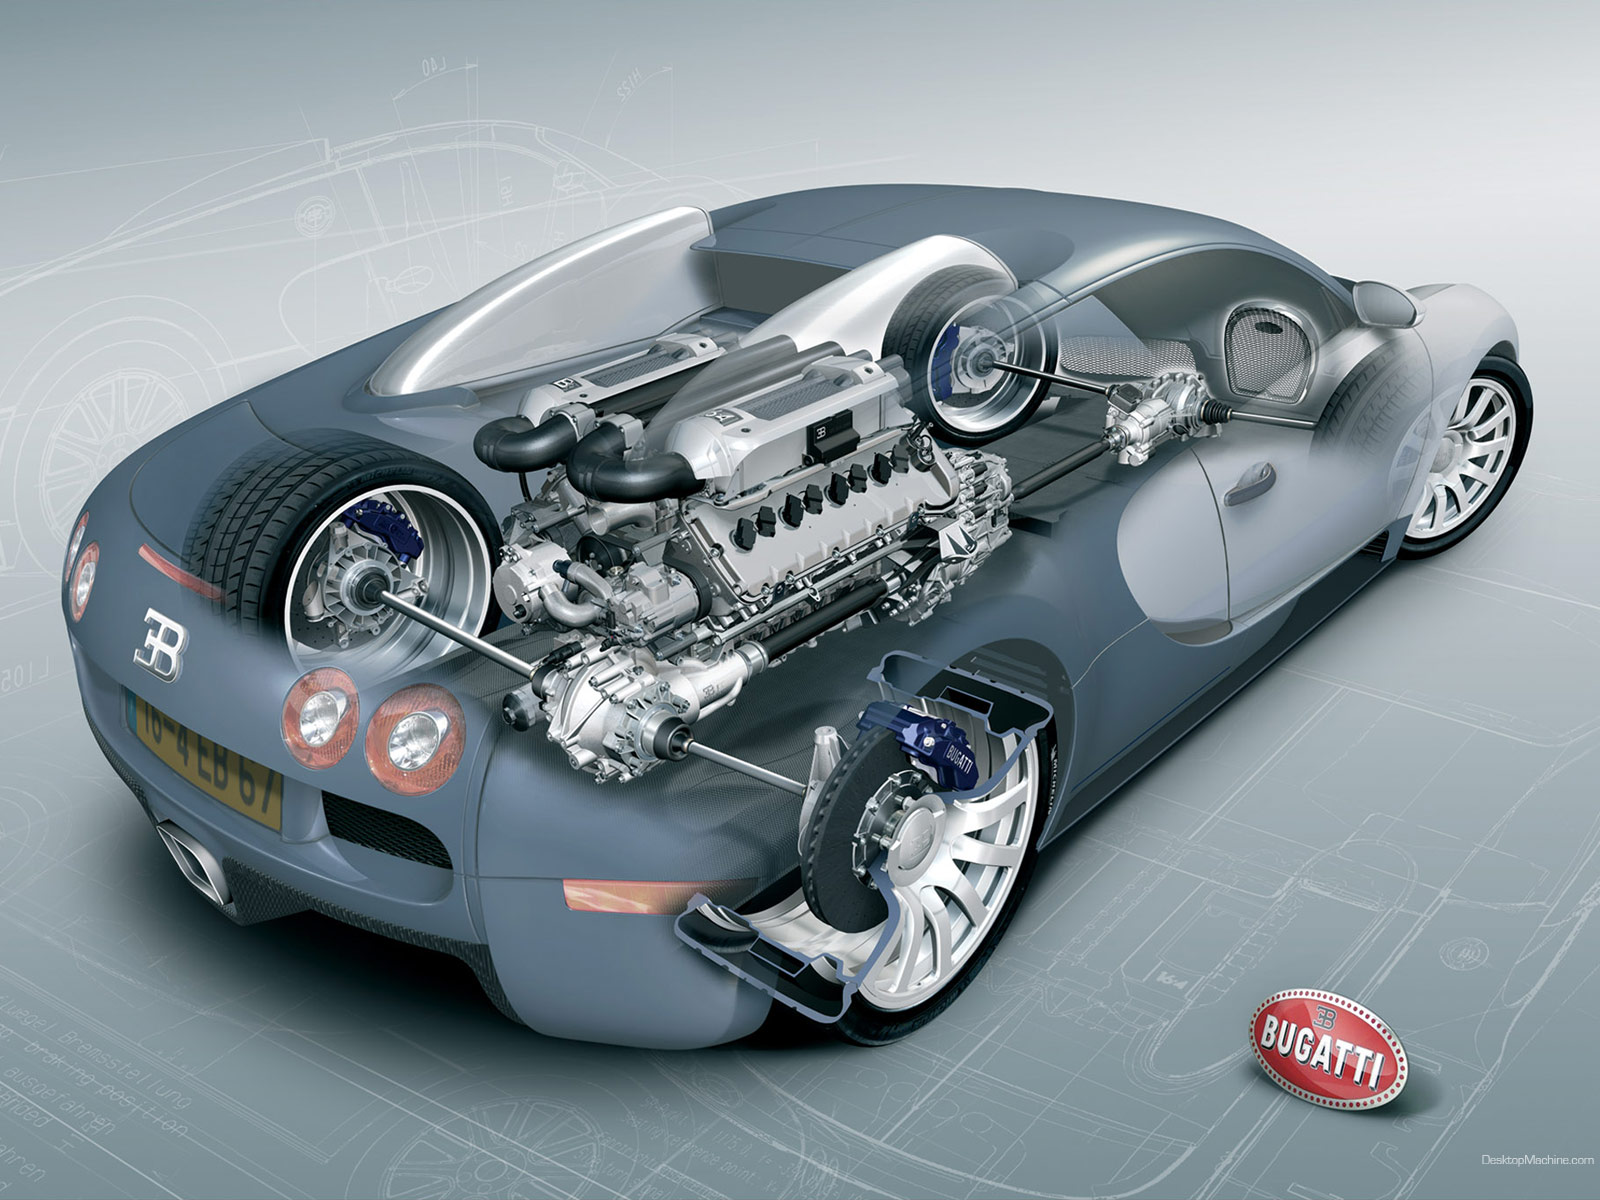 The man cave: Bugatti Veyron 16.4 Super Sport